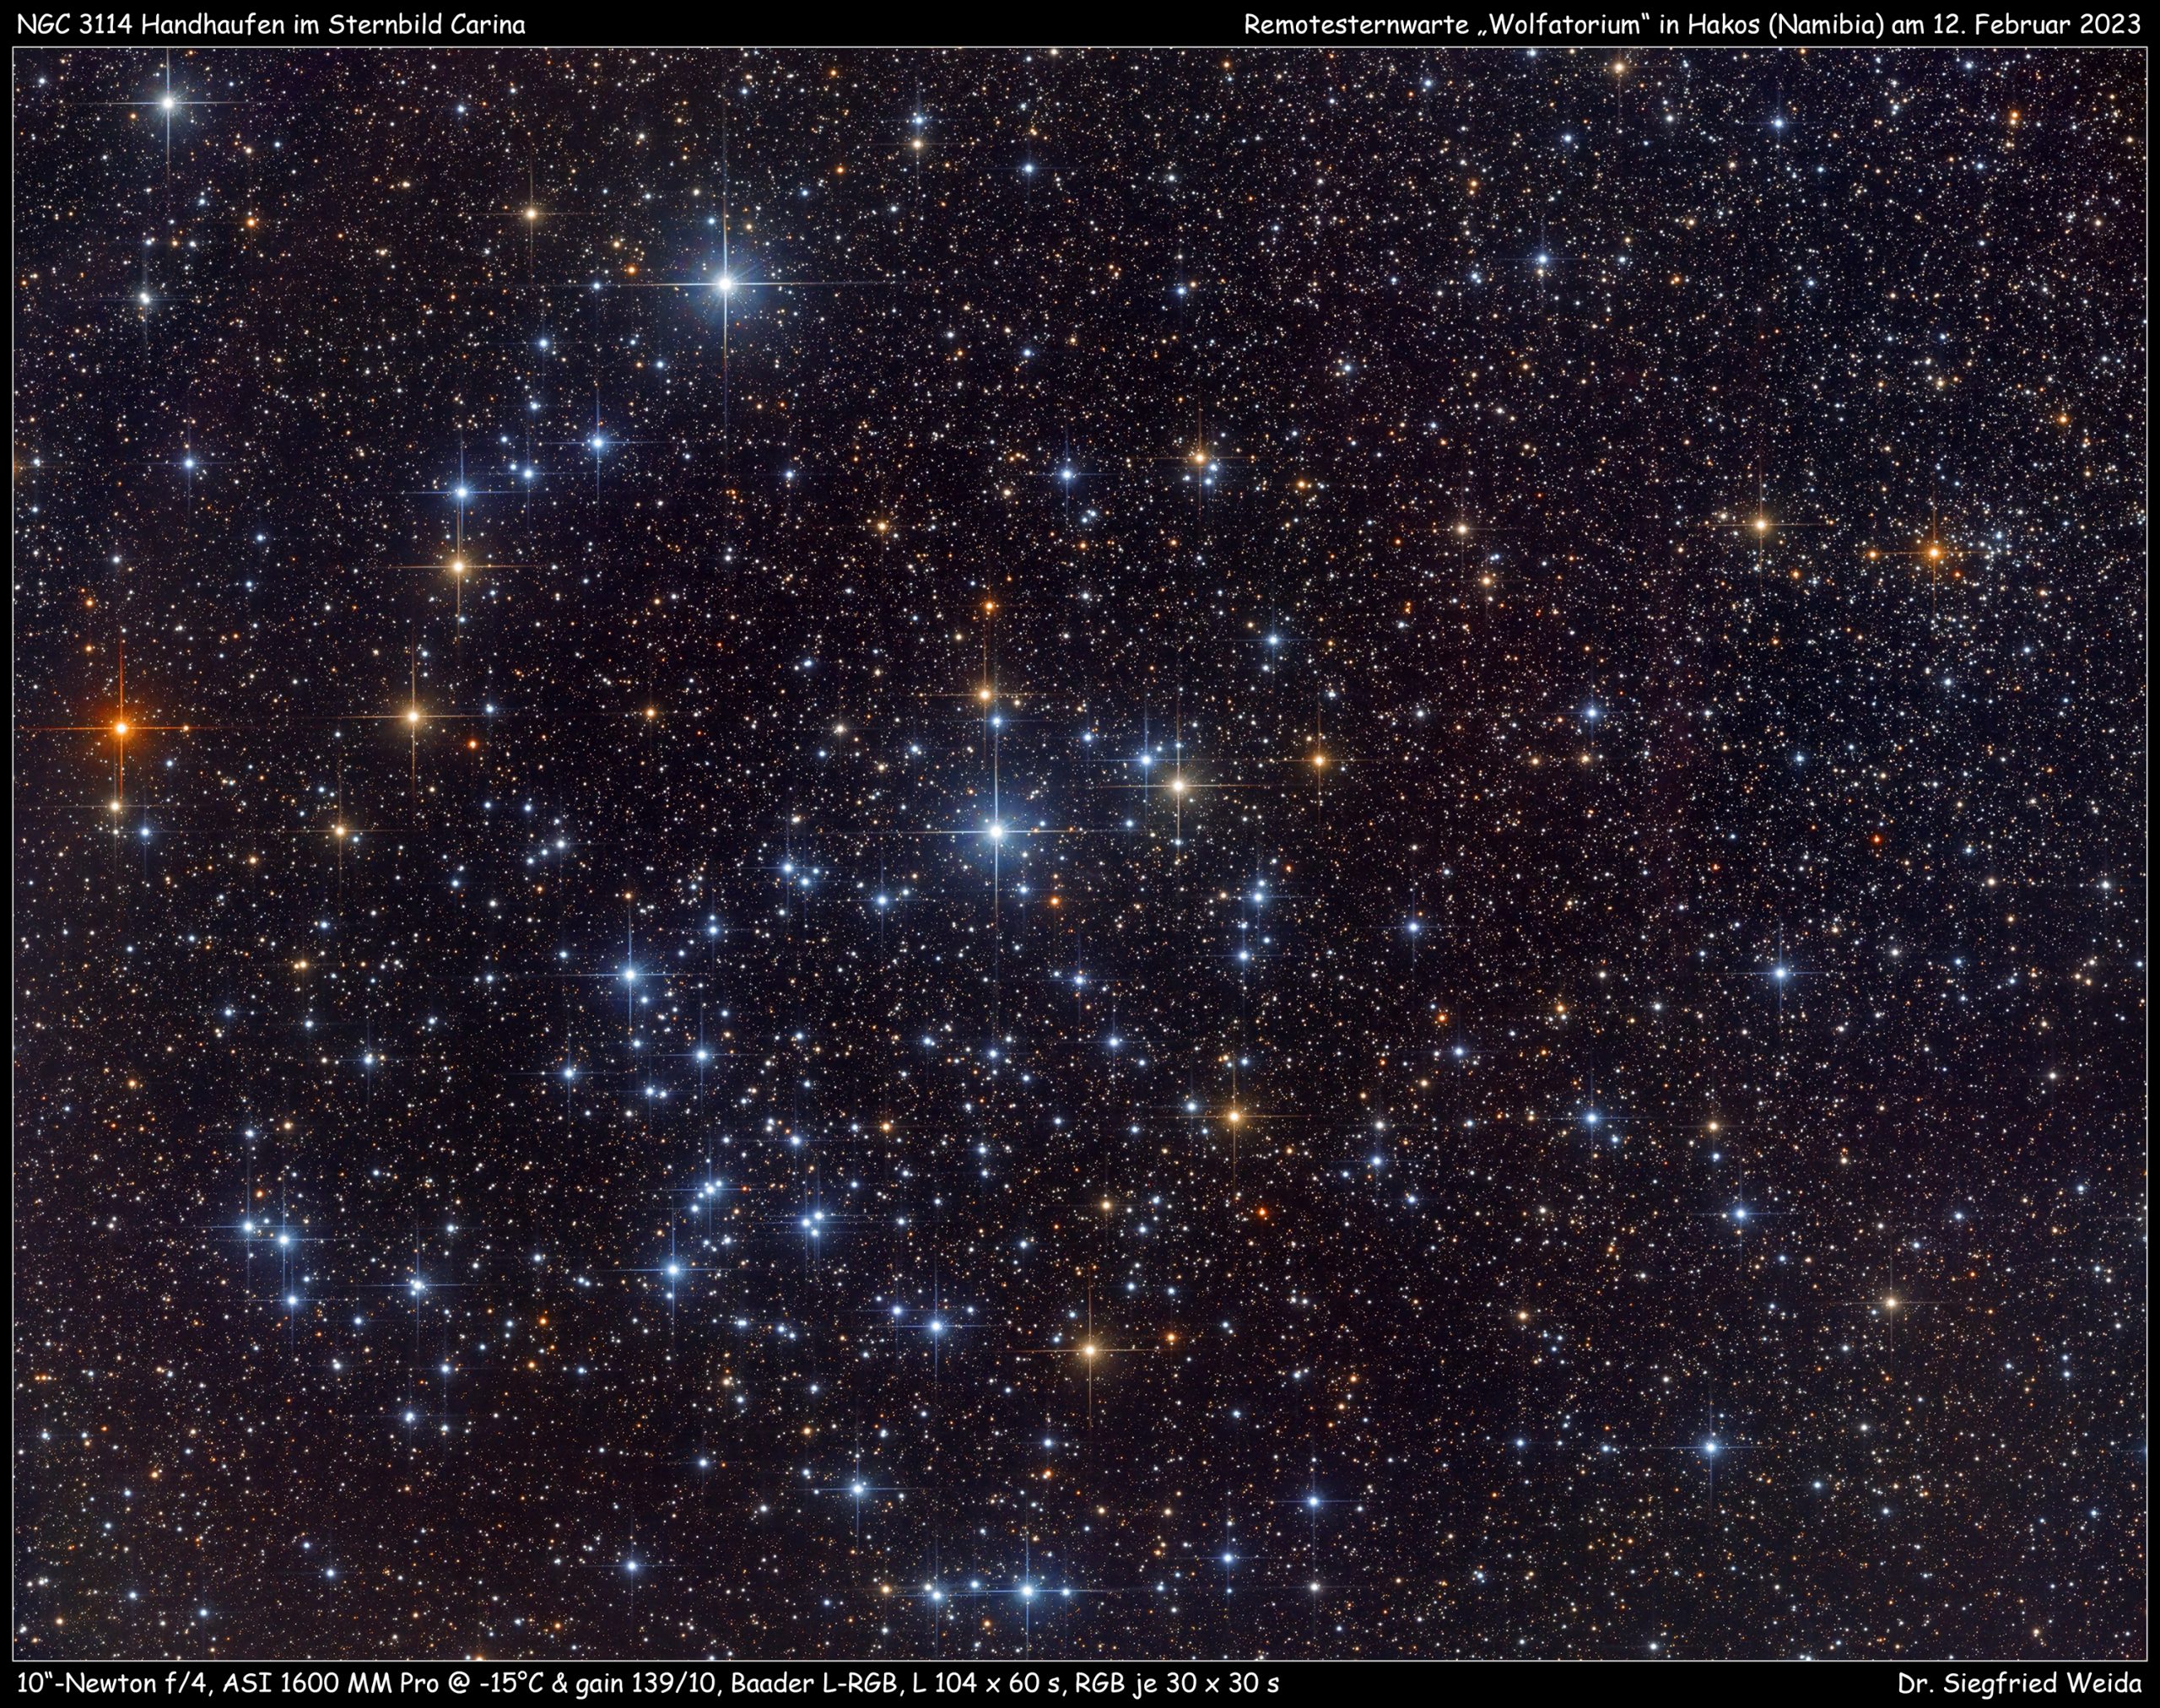 NGC 3314, Siegfried Weida